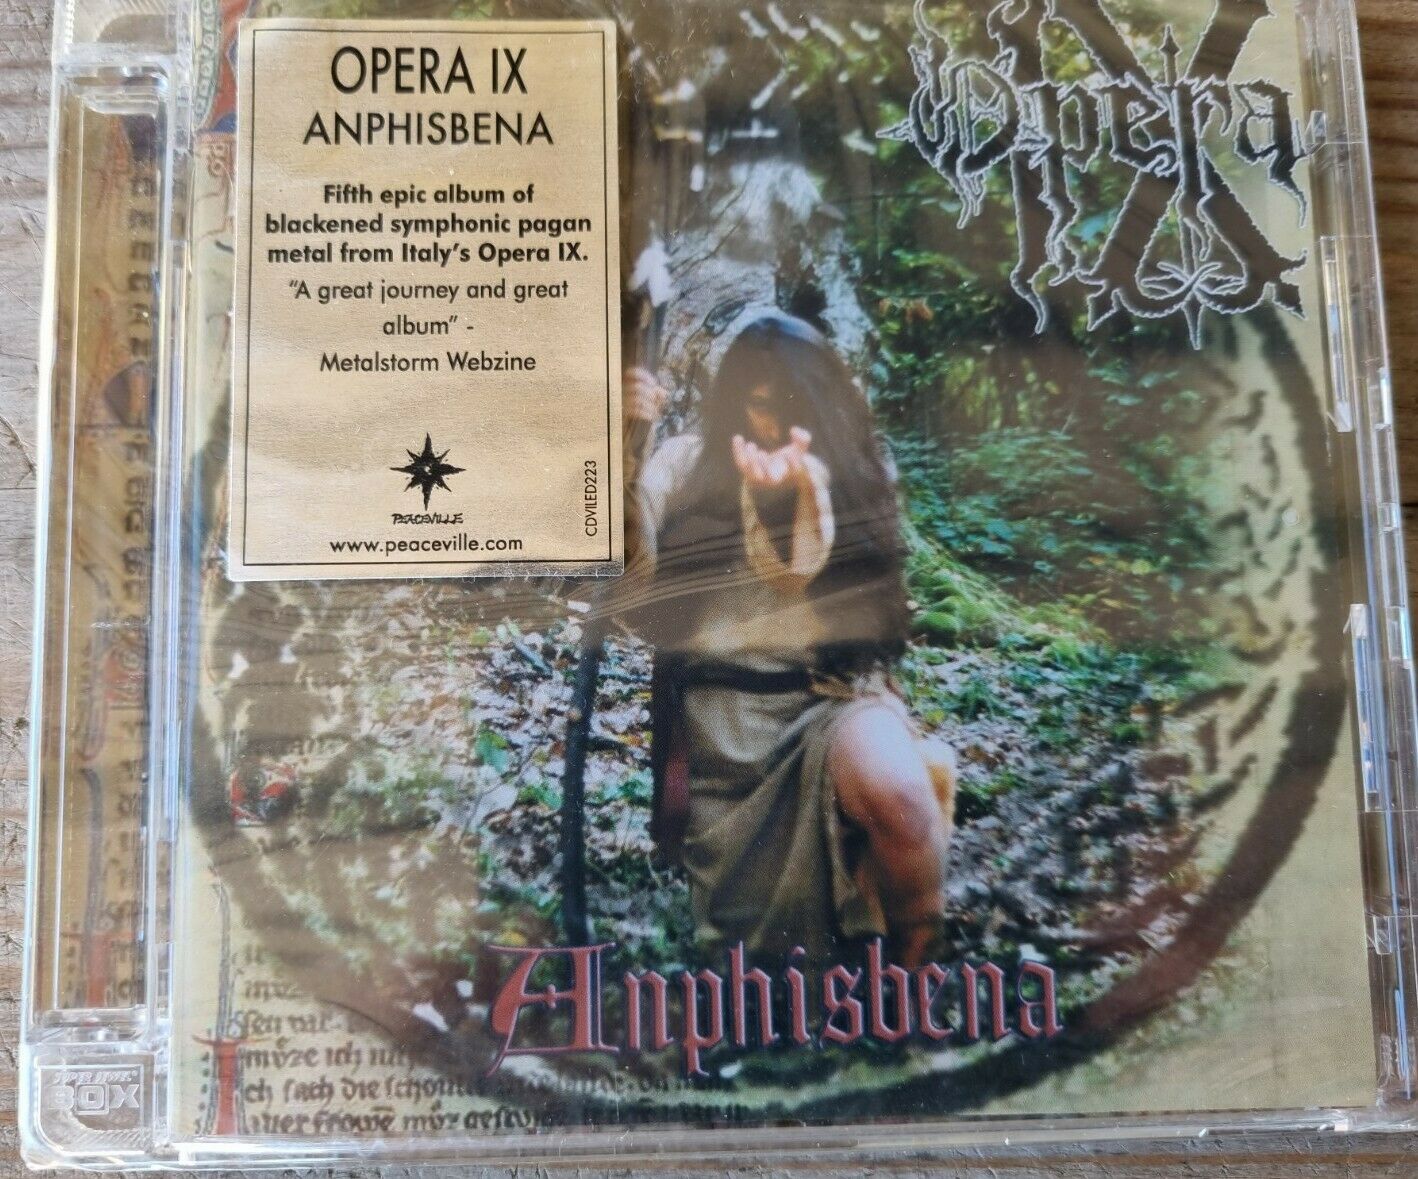 Opera IX - Anphisbena